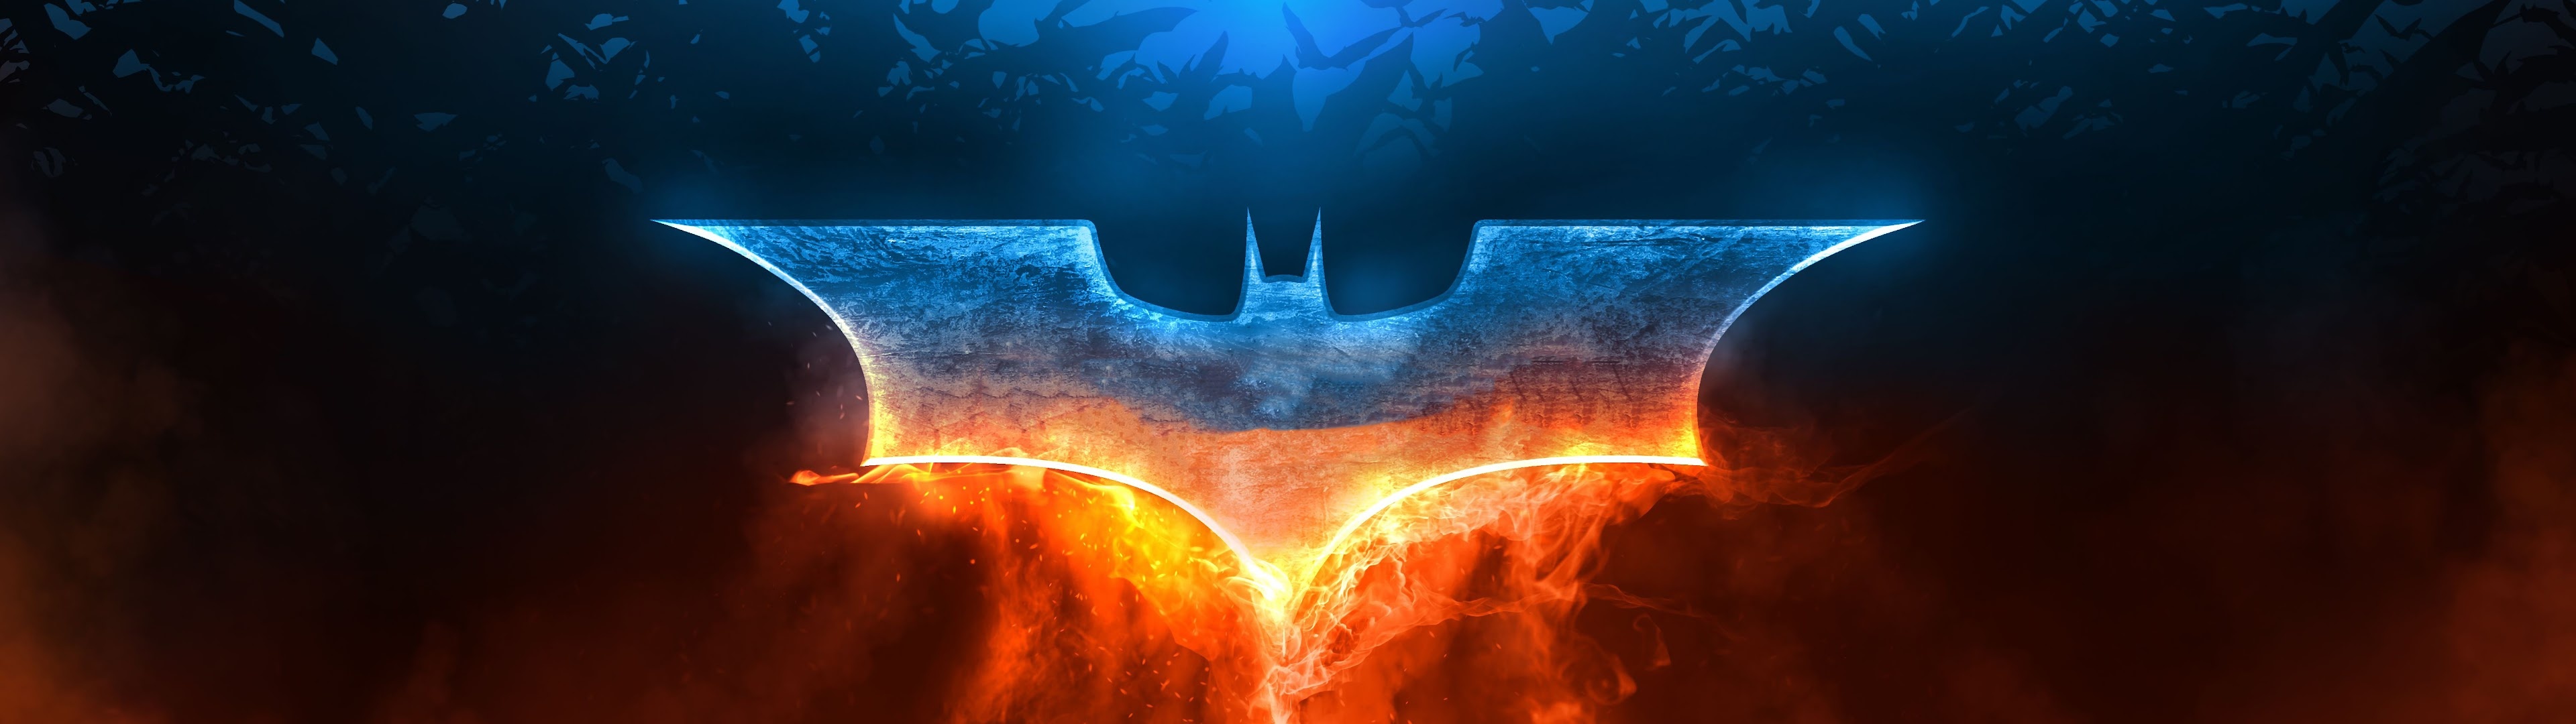 Batman Sign, Iconic emblem, Gotham City, Dark Knight, 3840x1080 Dual Screen Desktop